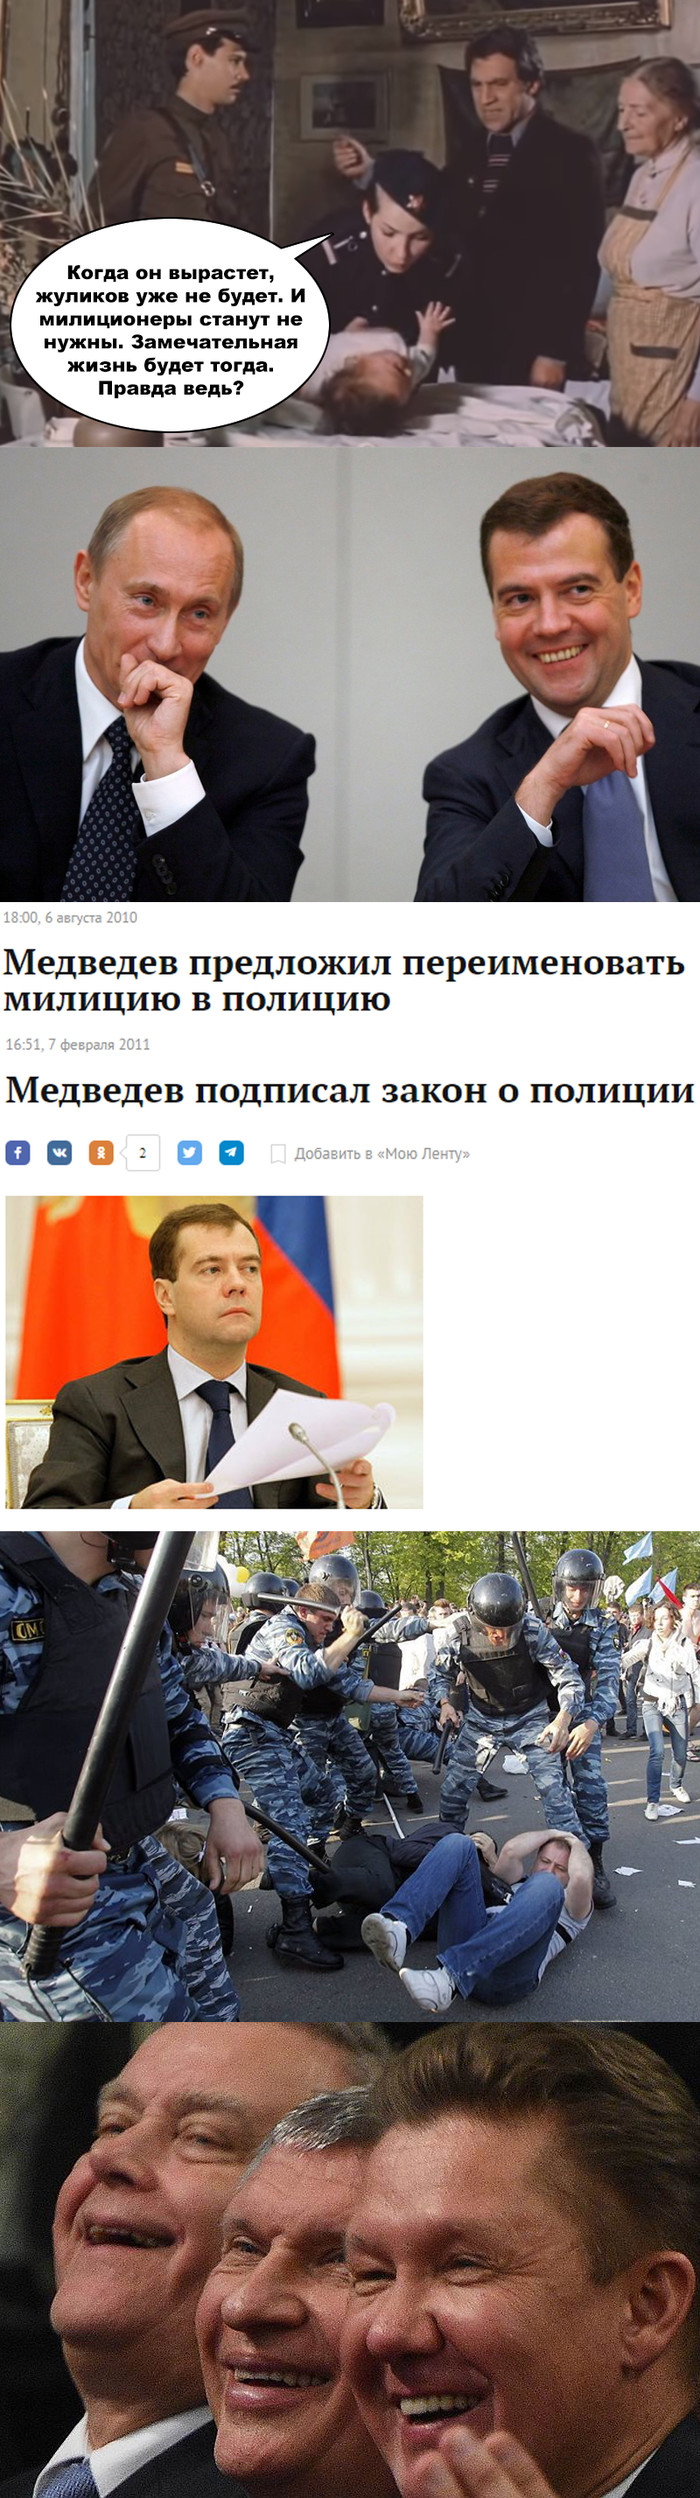 Naive Varenka - Militia, Police, Dmitry Medvedev, Vladimir Putin, Oligarchs, Longpost, Meeting place can not be Changed, Politics